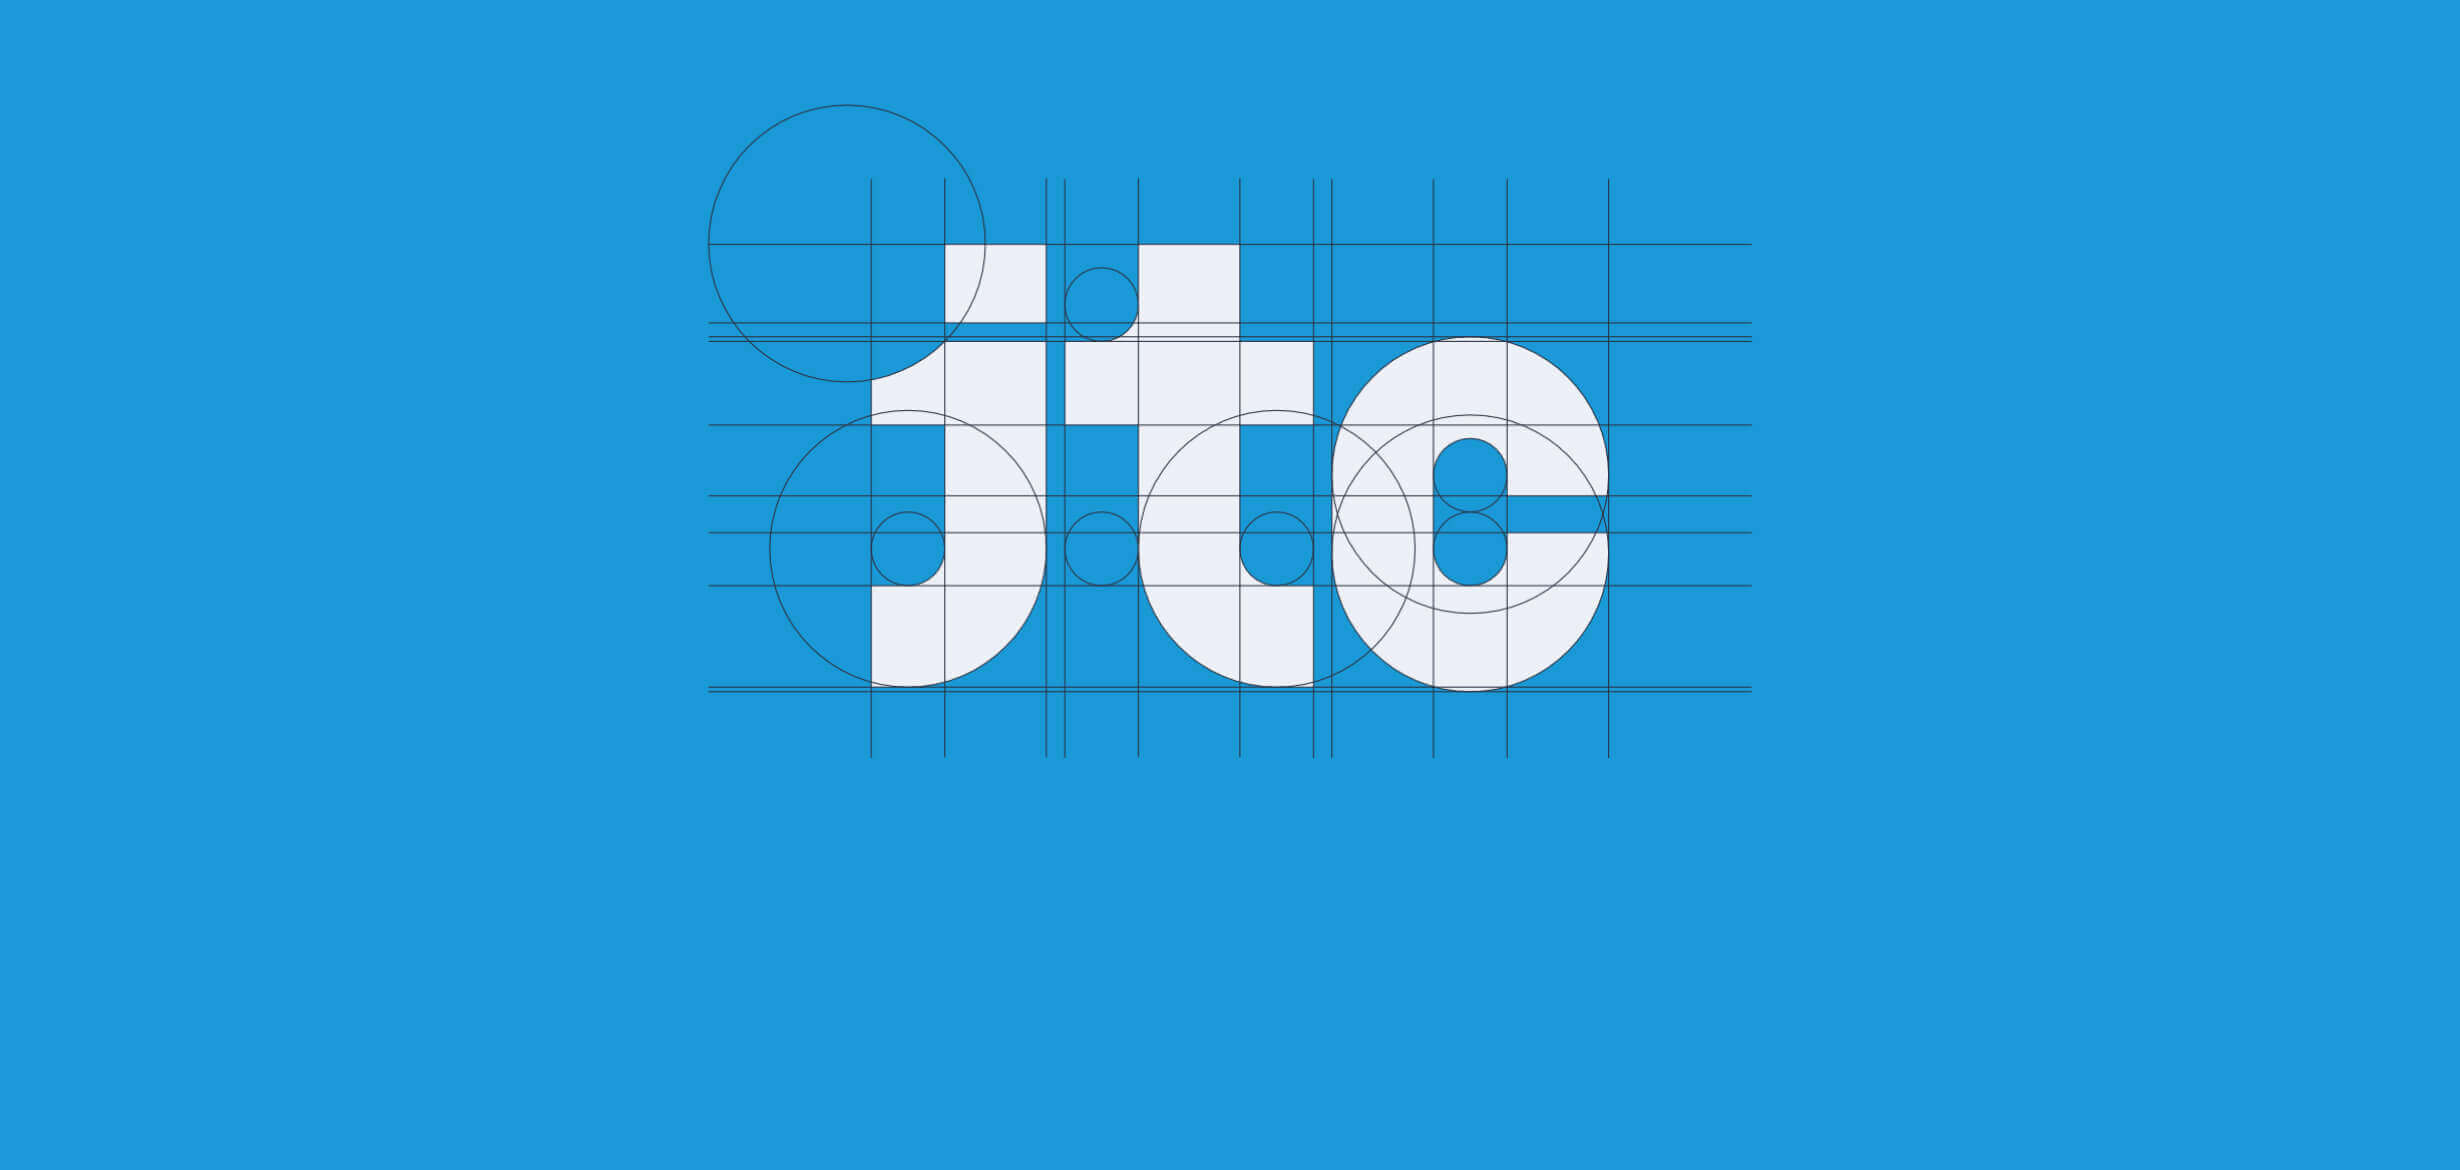 JTC logo background